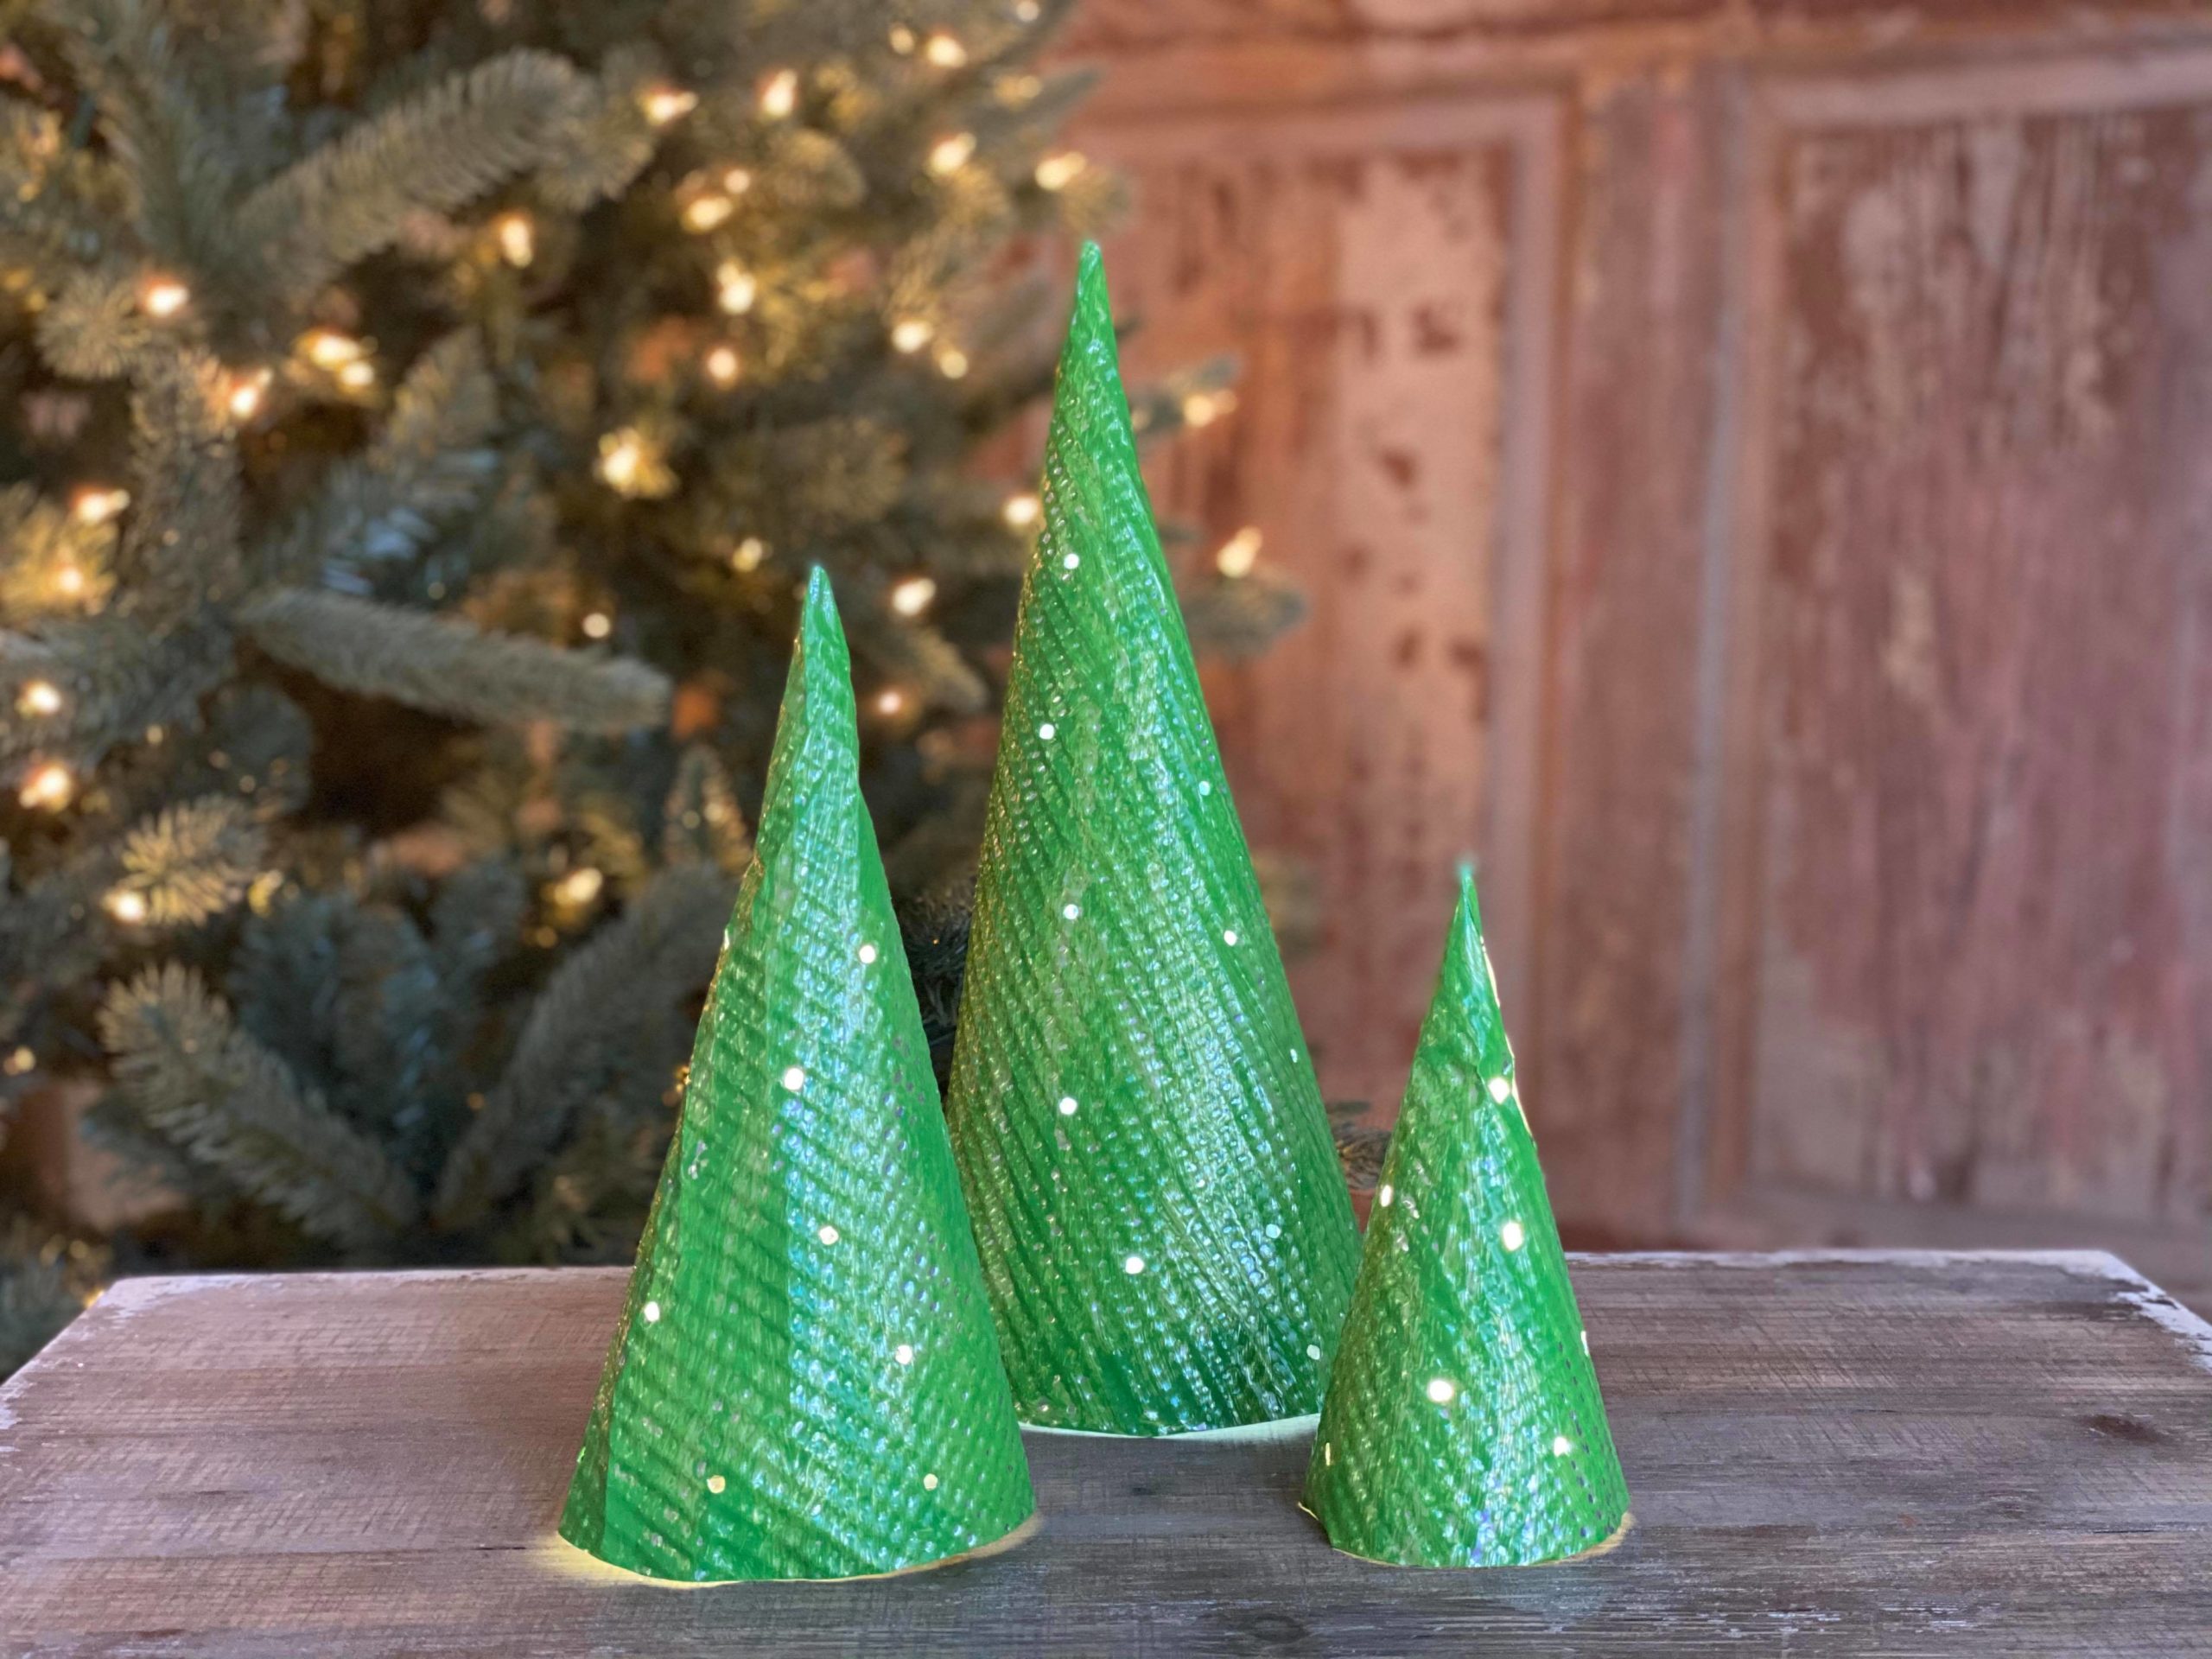 EPBOT: DIY Steampunk Cone Trees